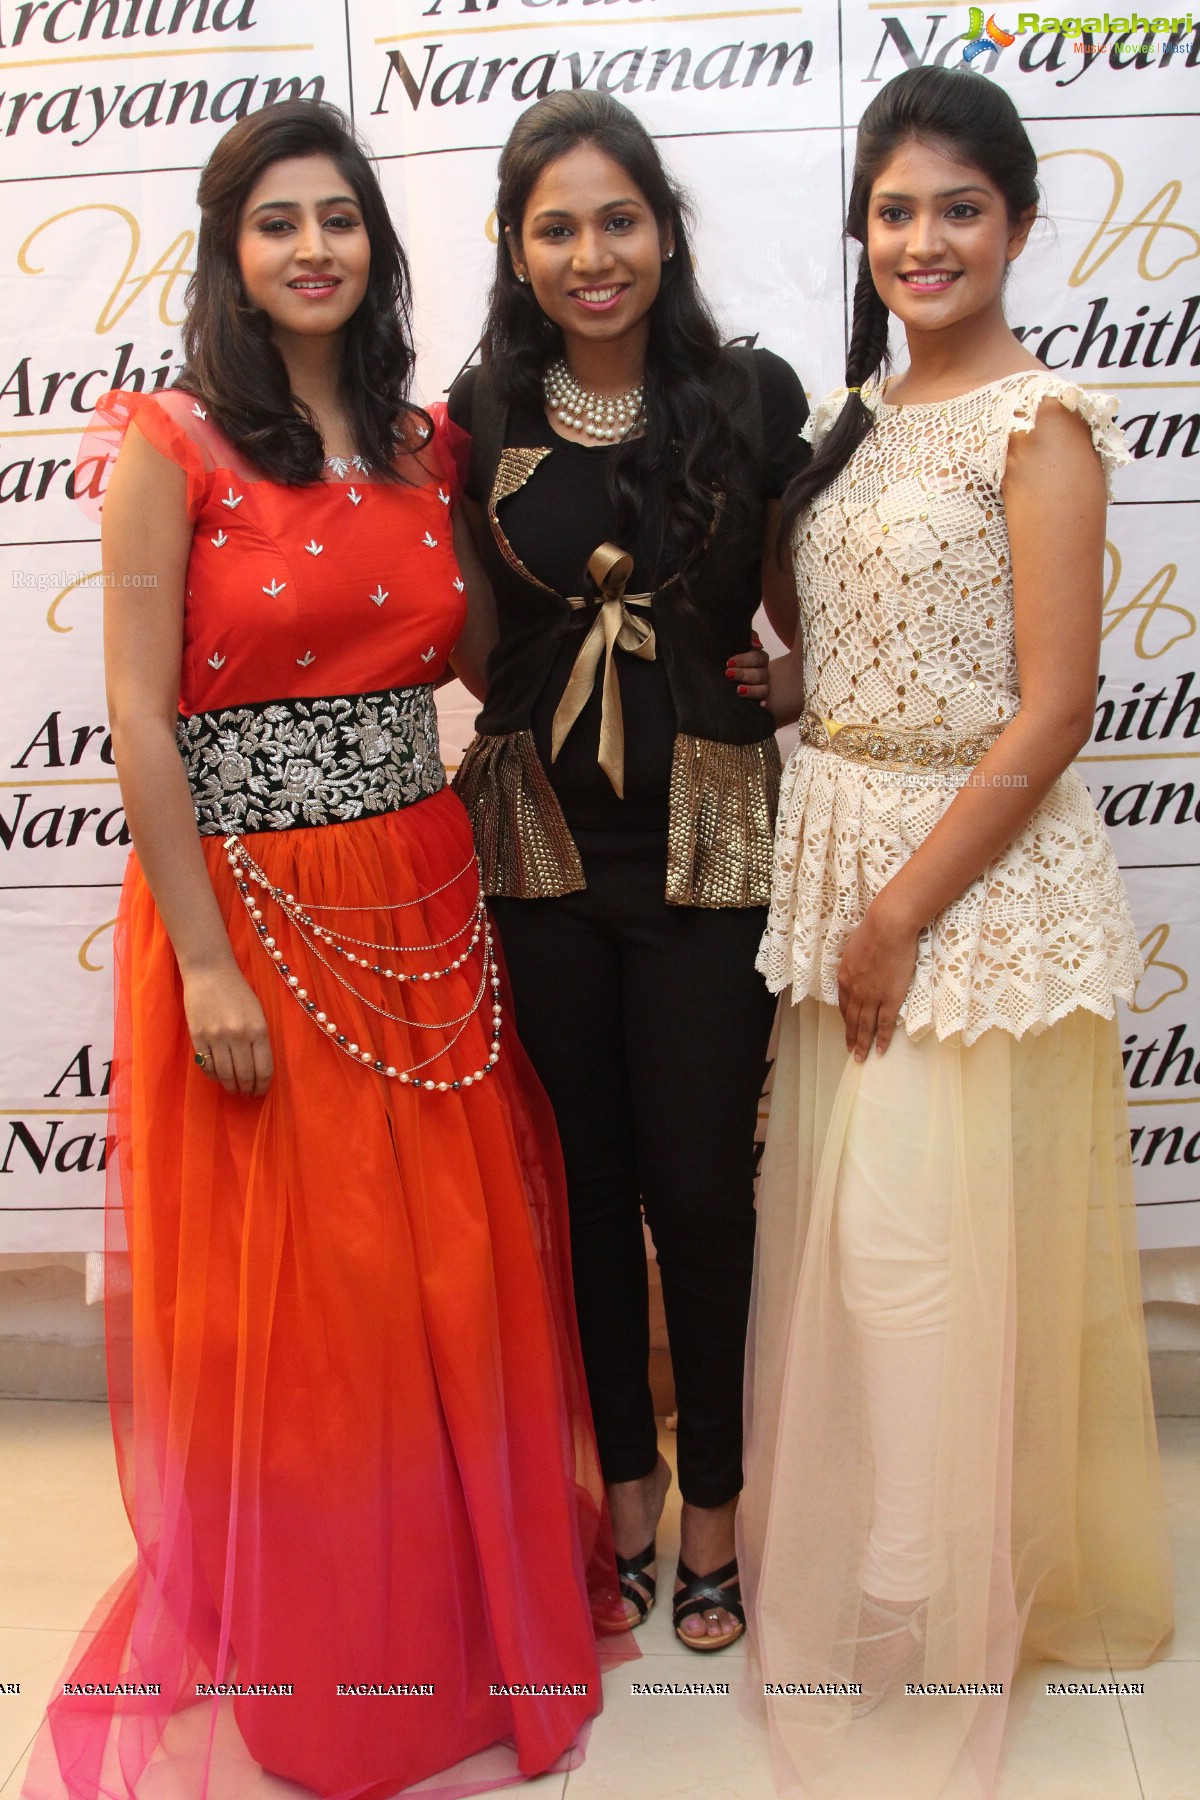 Architha Narayanam Designer Studio Launch, Hyderabad